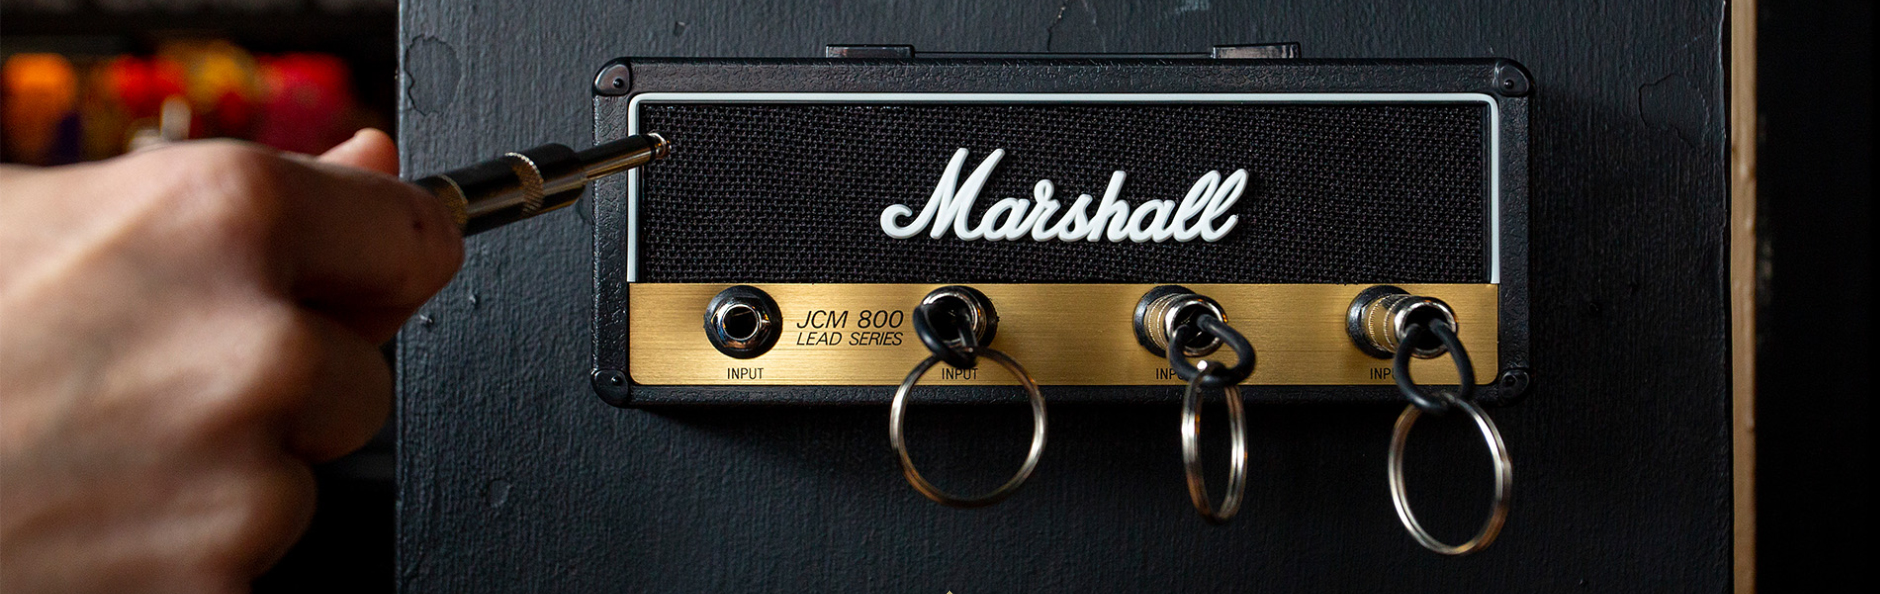 Marshall Guitar Amp Key Holder  Marshall Jack Rack Key Holder